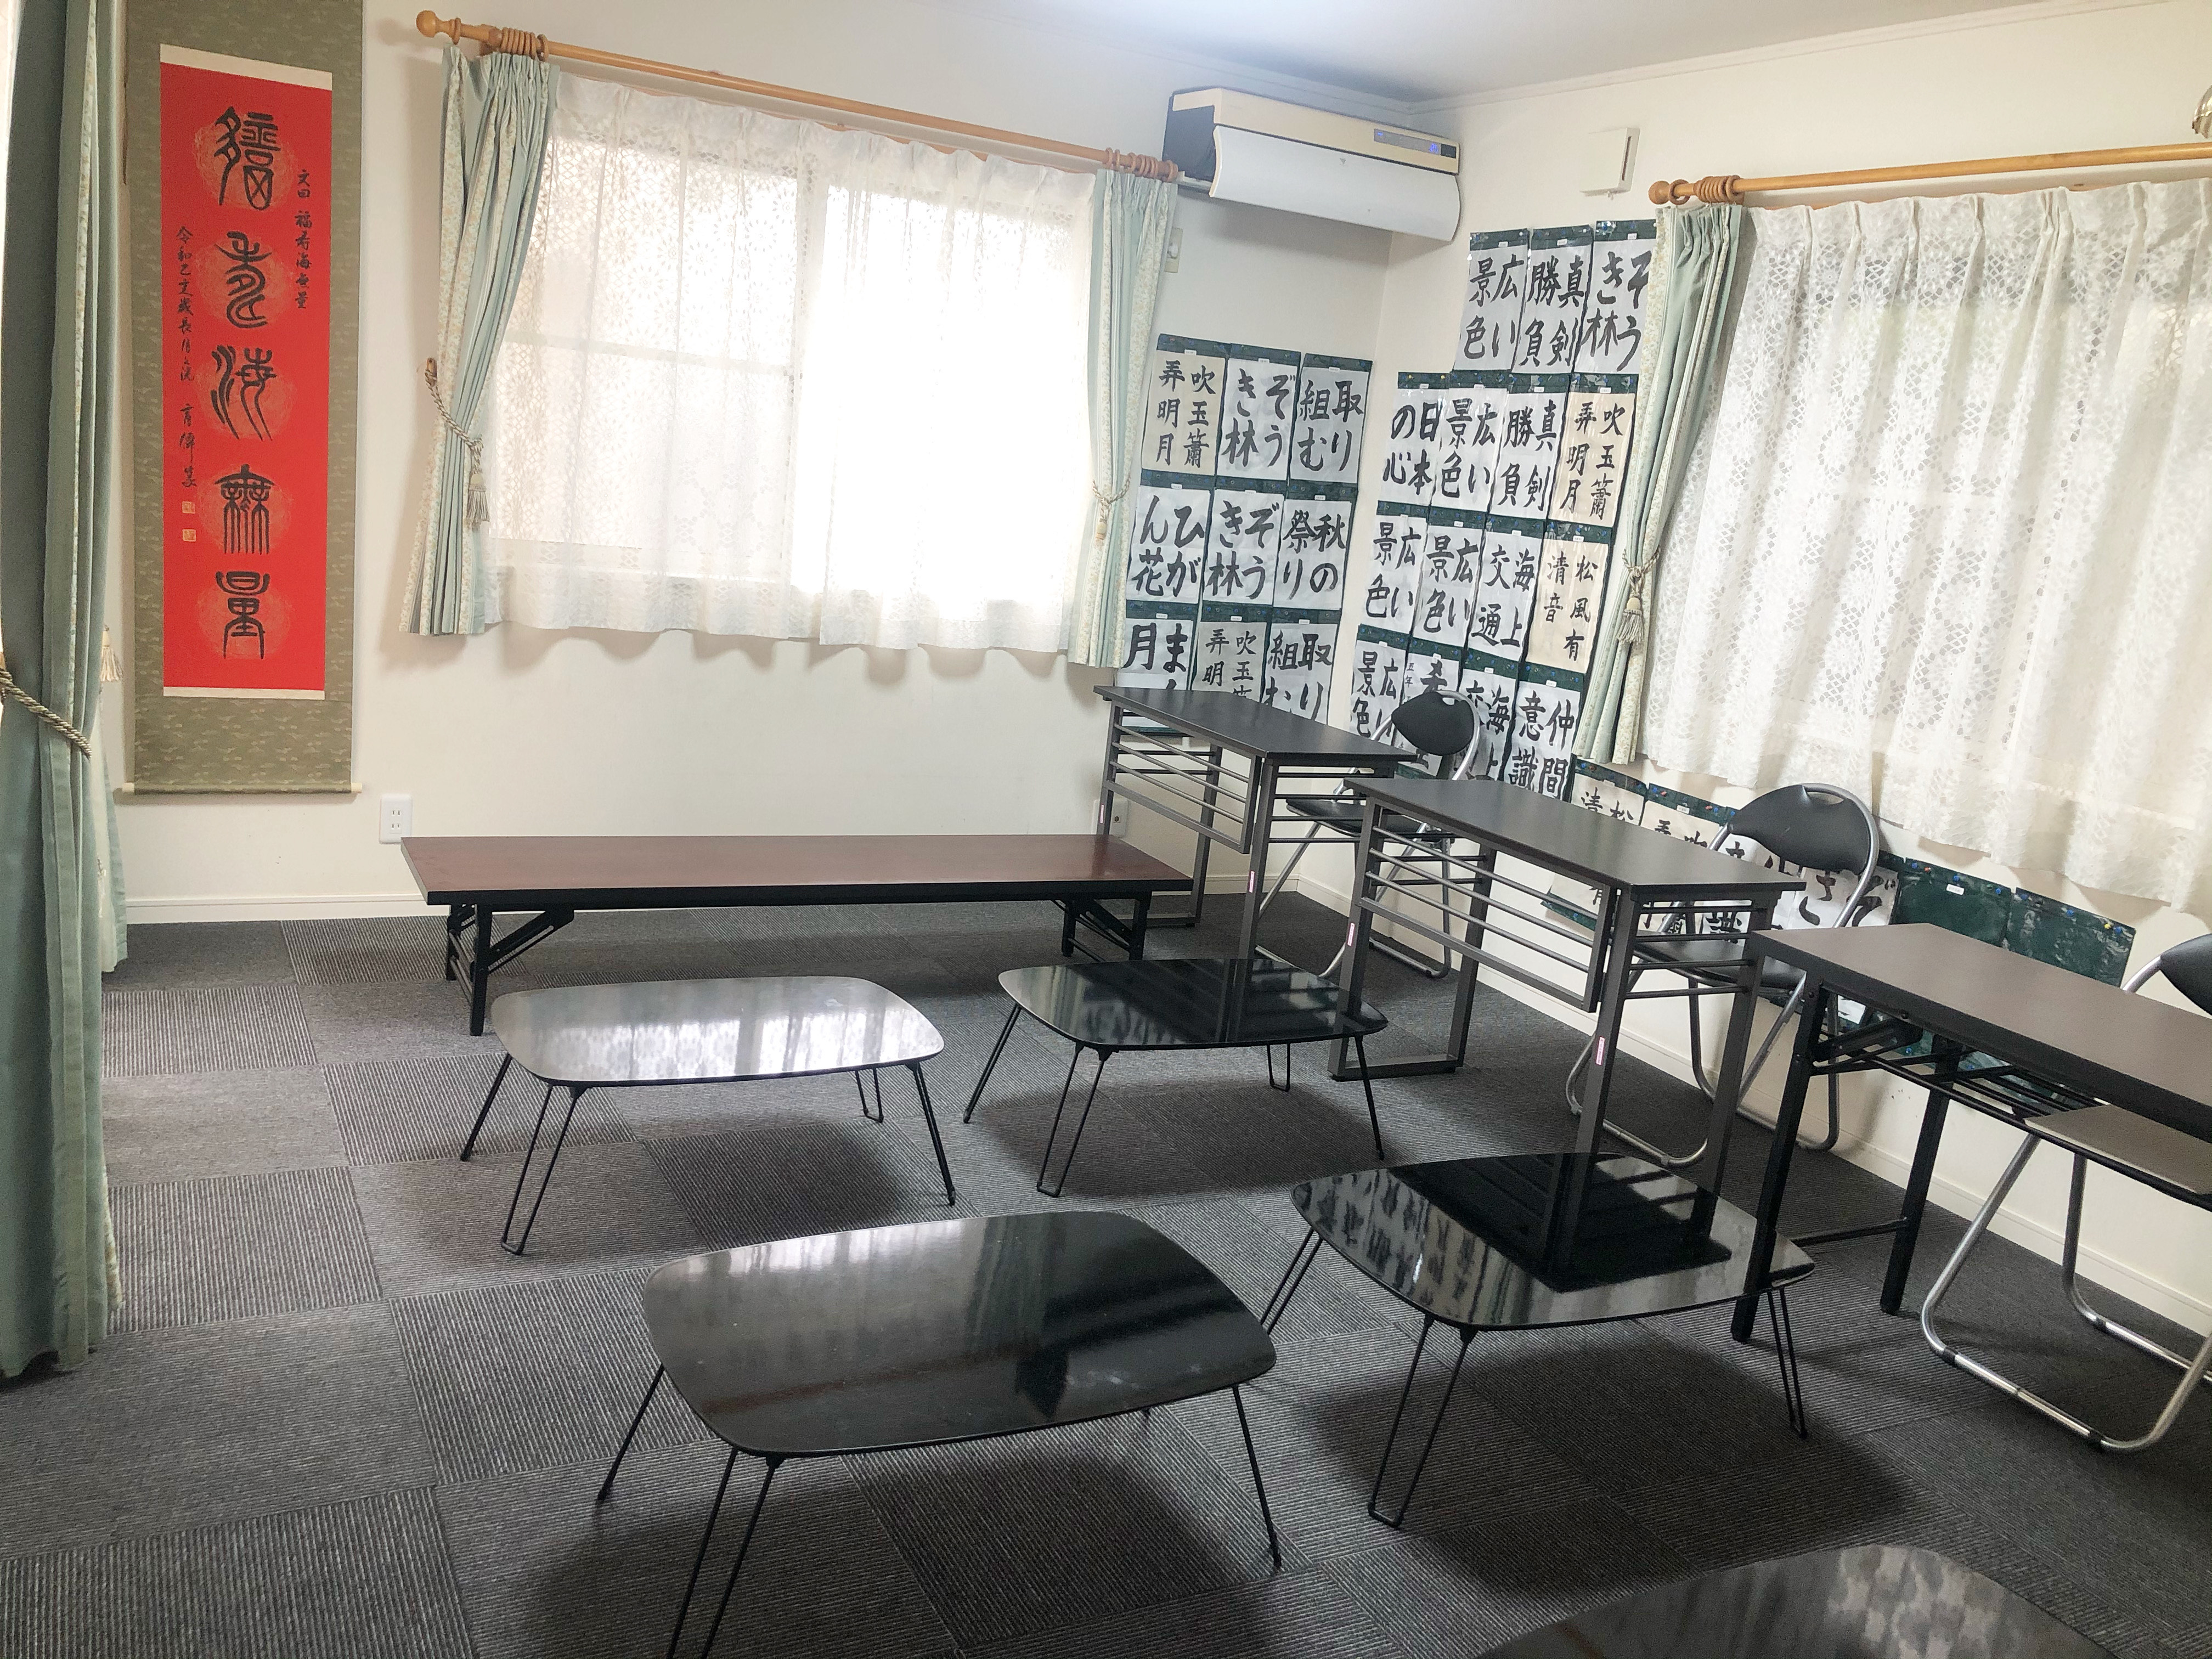 相模原市の島田育僊書道教室の内観